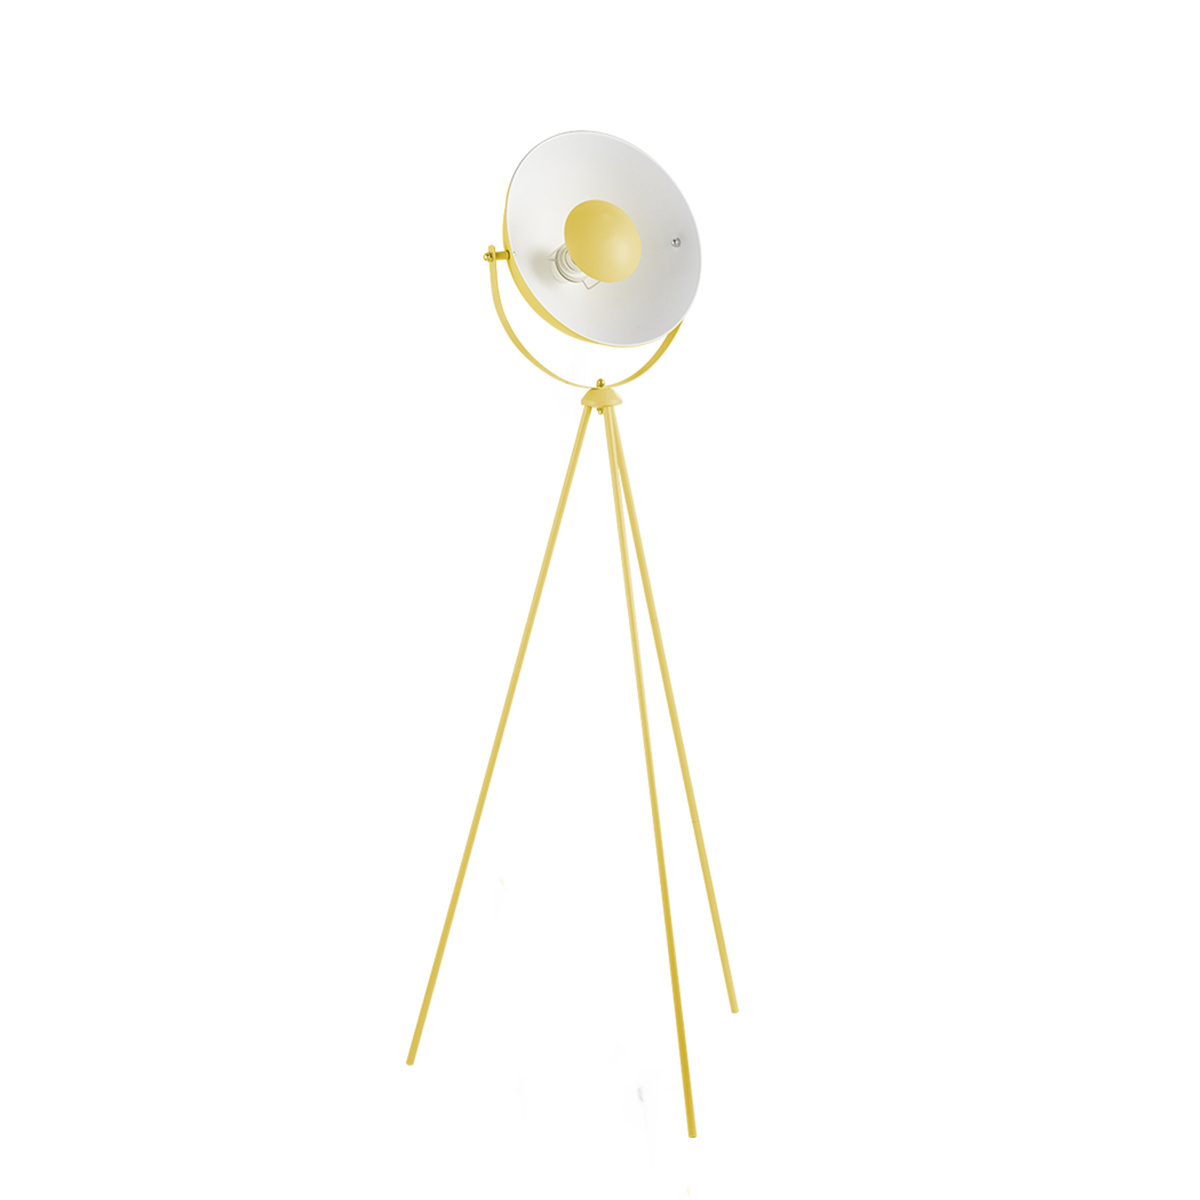 Tangla lighting - TLF7006-01YL - LED floor lamp 1 Light - metal in yellow - tripod - E27